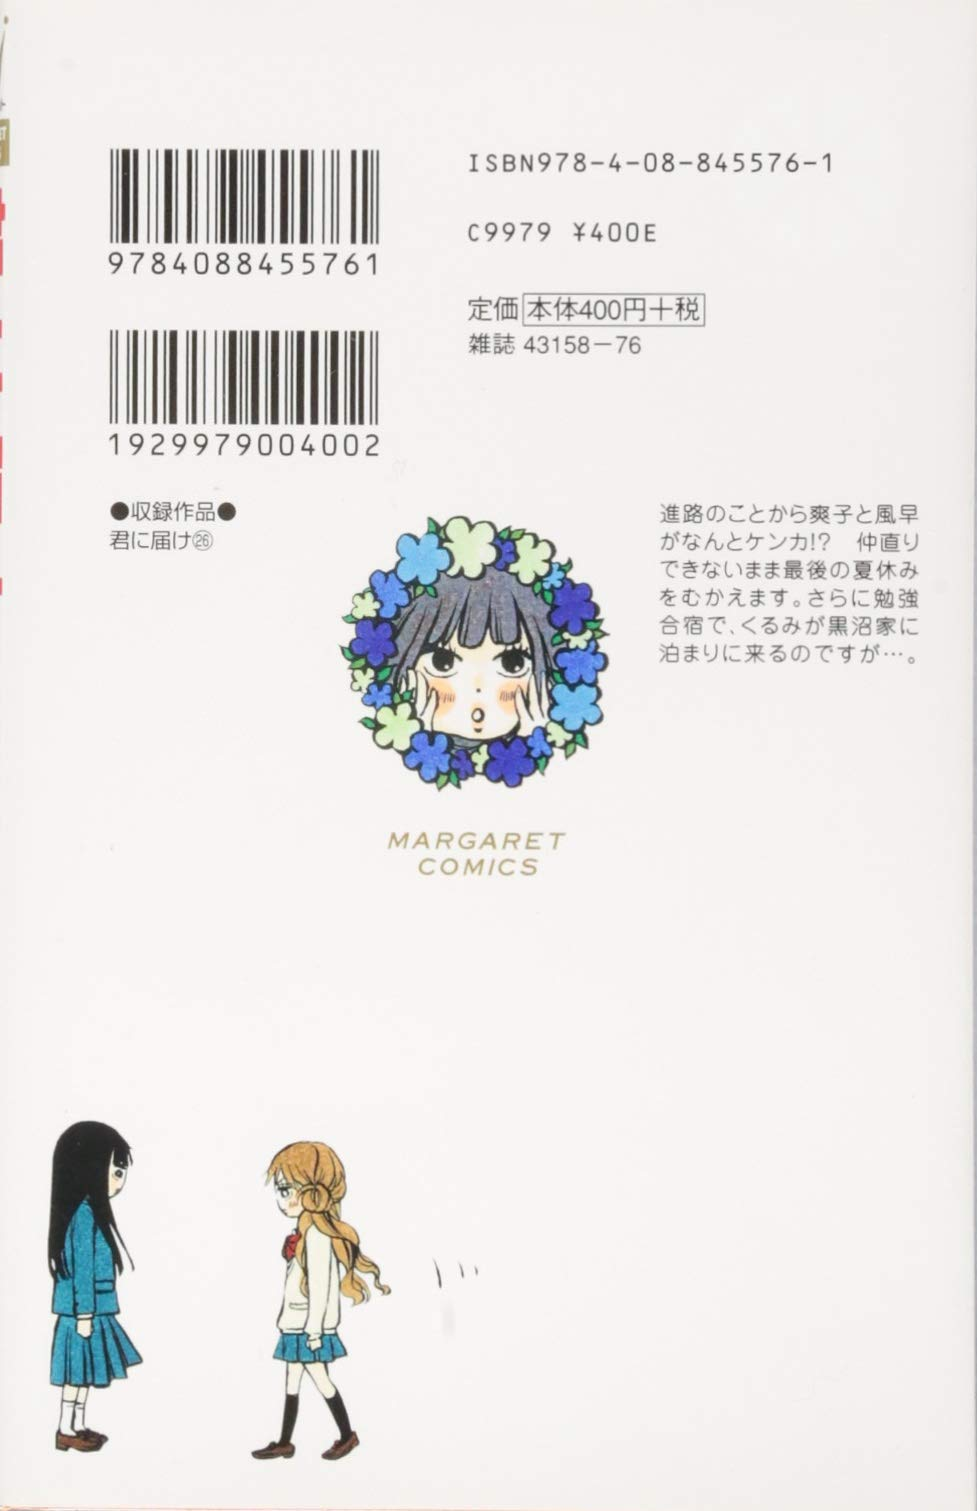 Kimi ni Todoke Manga Volume 26 | Kimi ni Todoke Wiki | Fandom